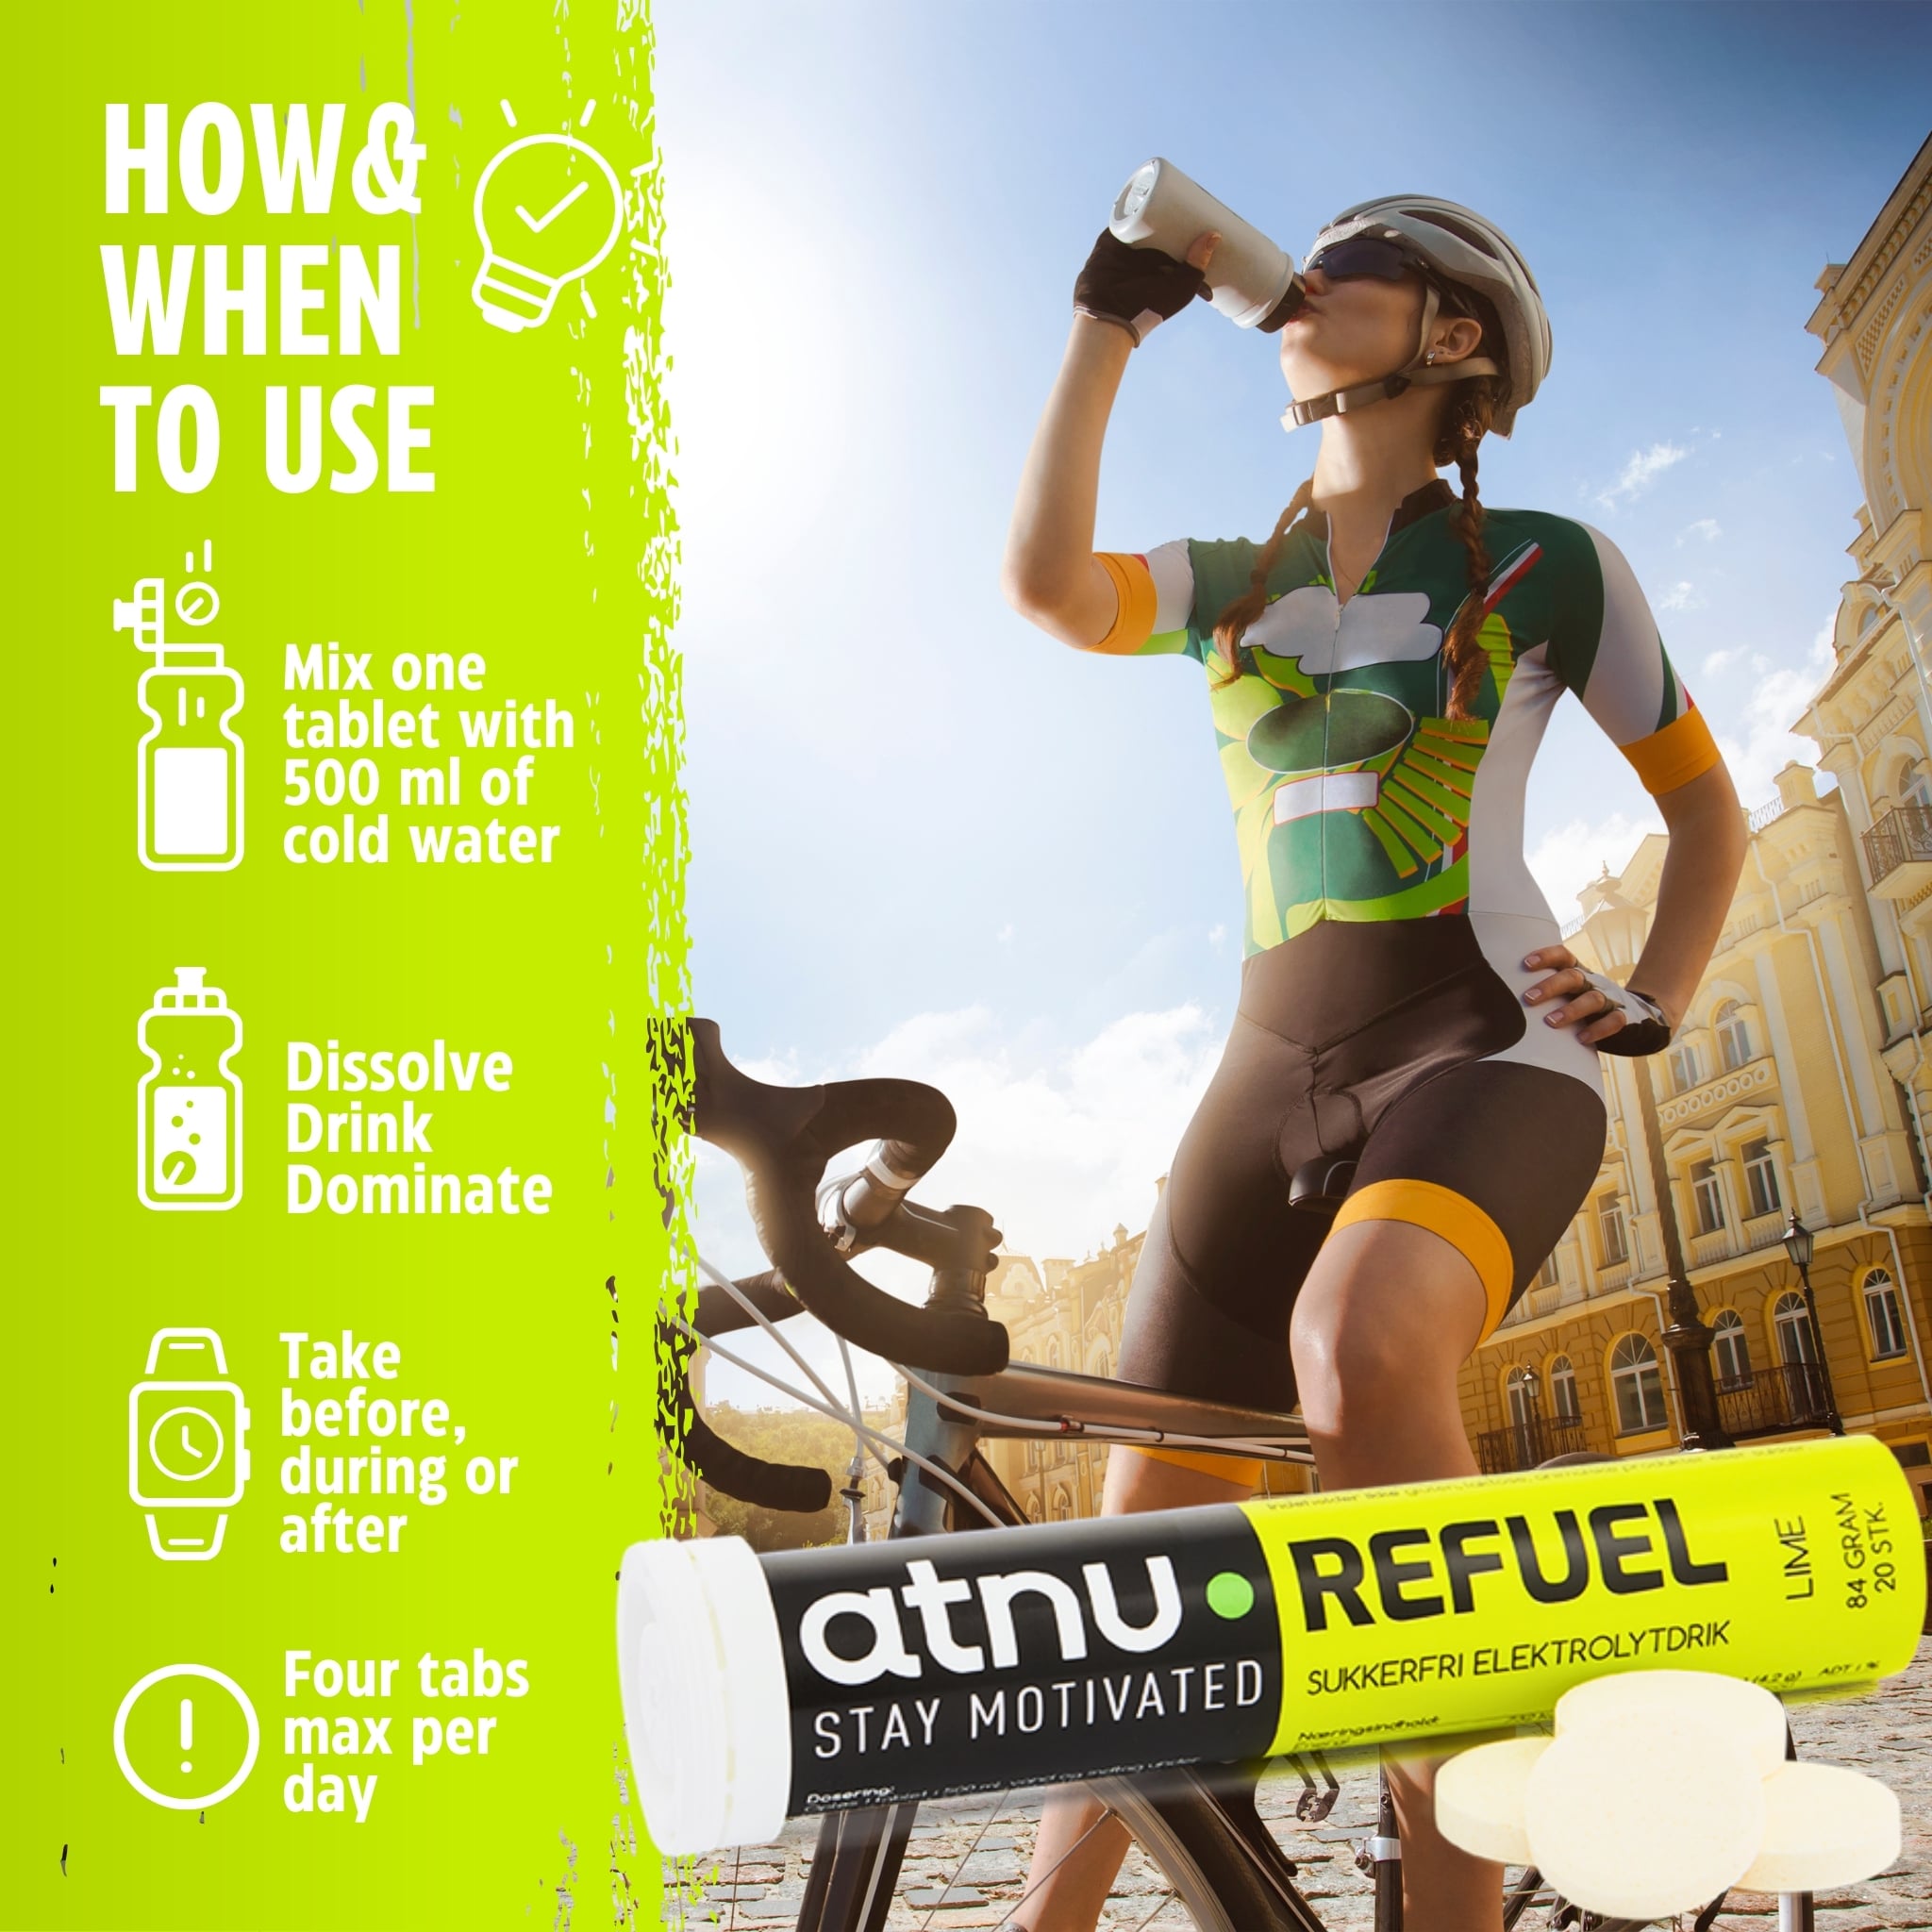 ATNU Refuel Elektrolyttabs Lime (20 tabs) - Usage instructions